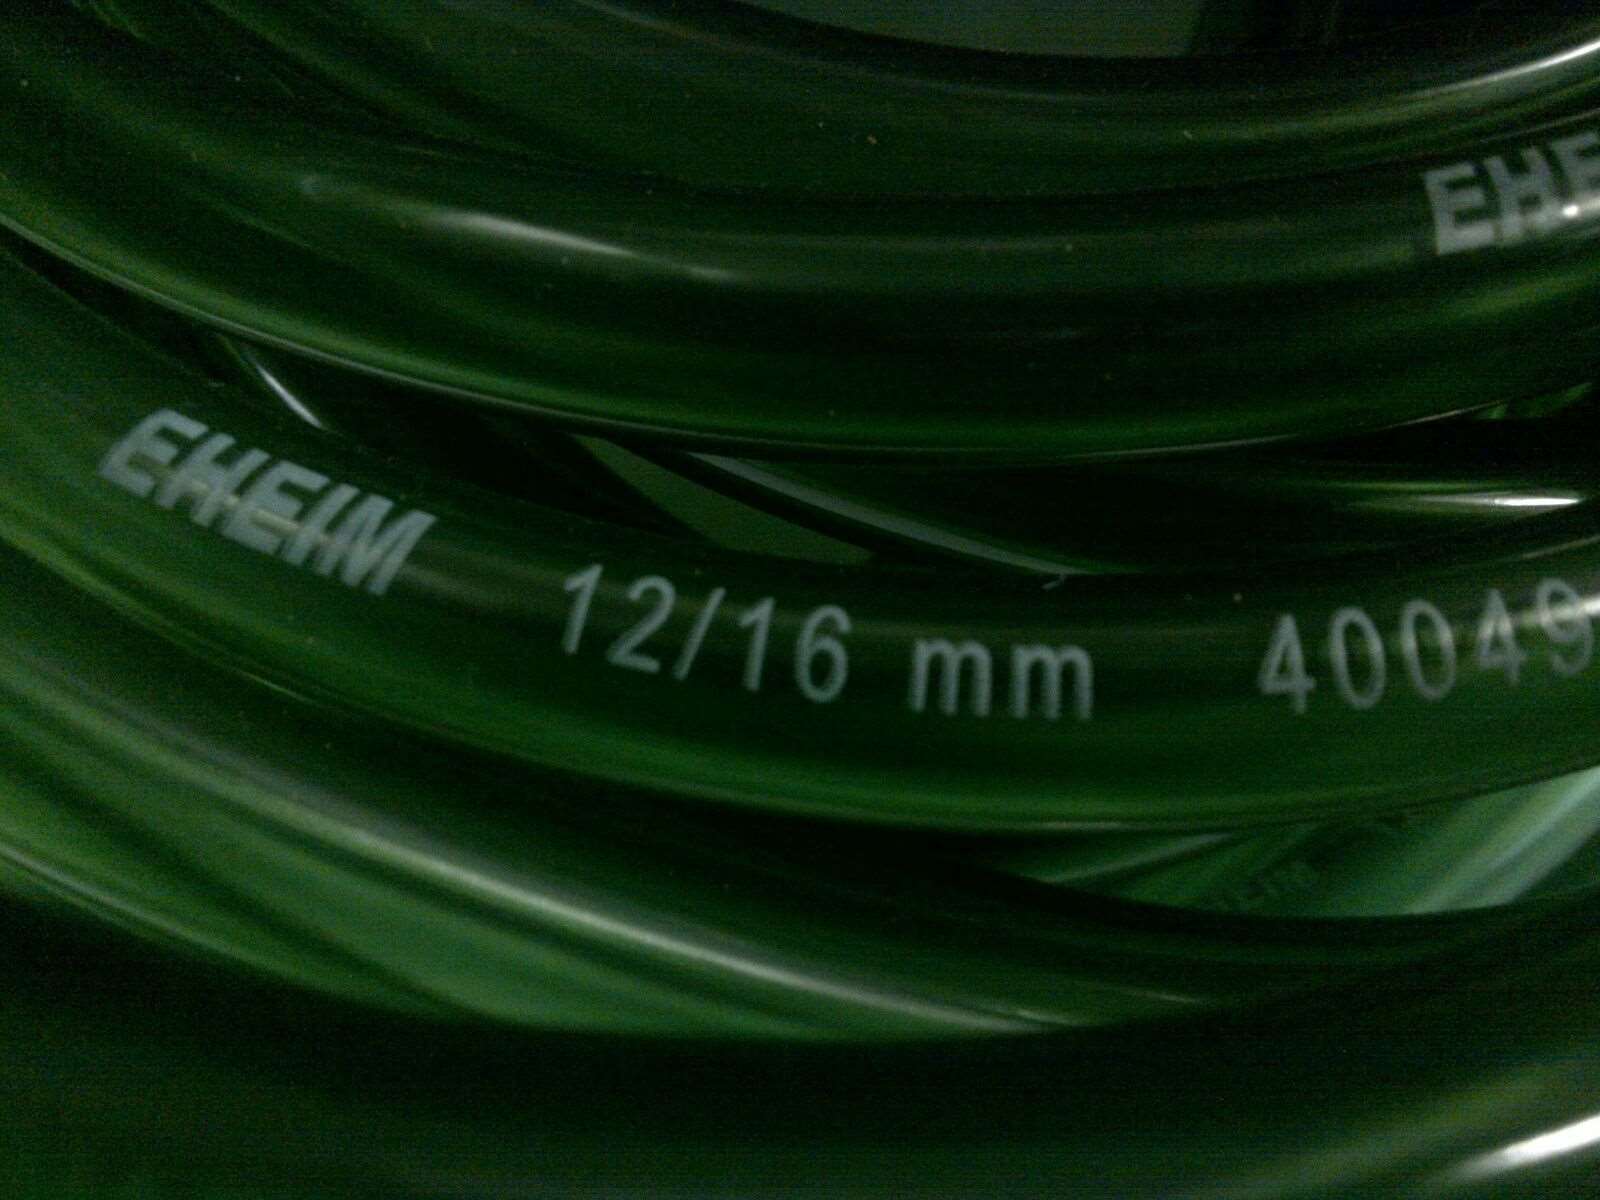 New Eheim 12/16 hoses 1 metre length